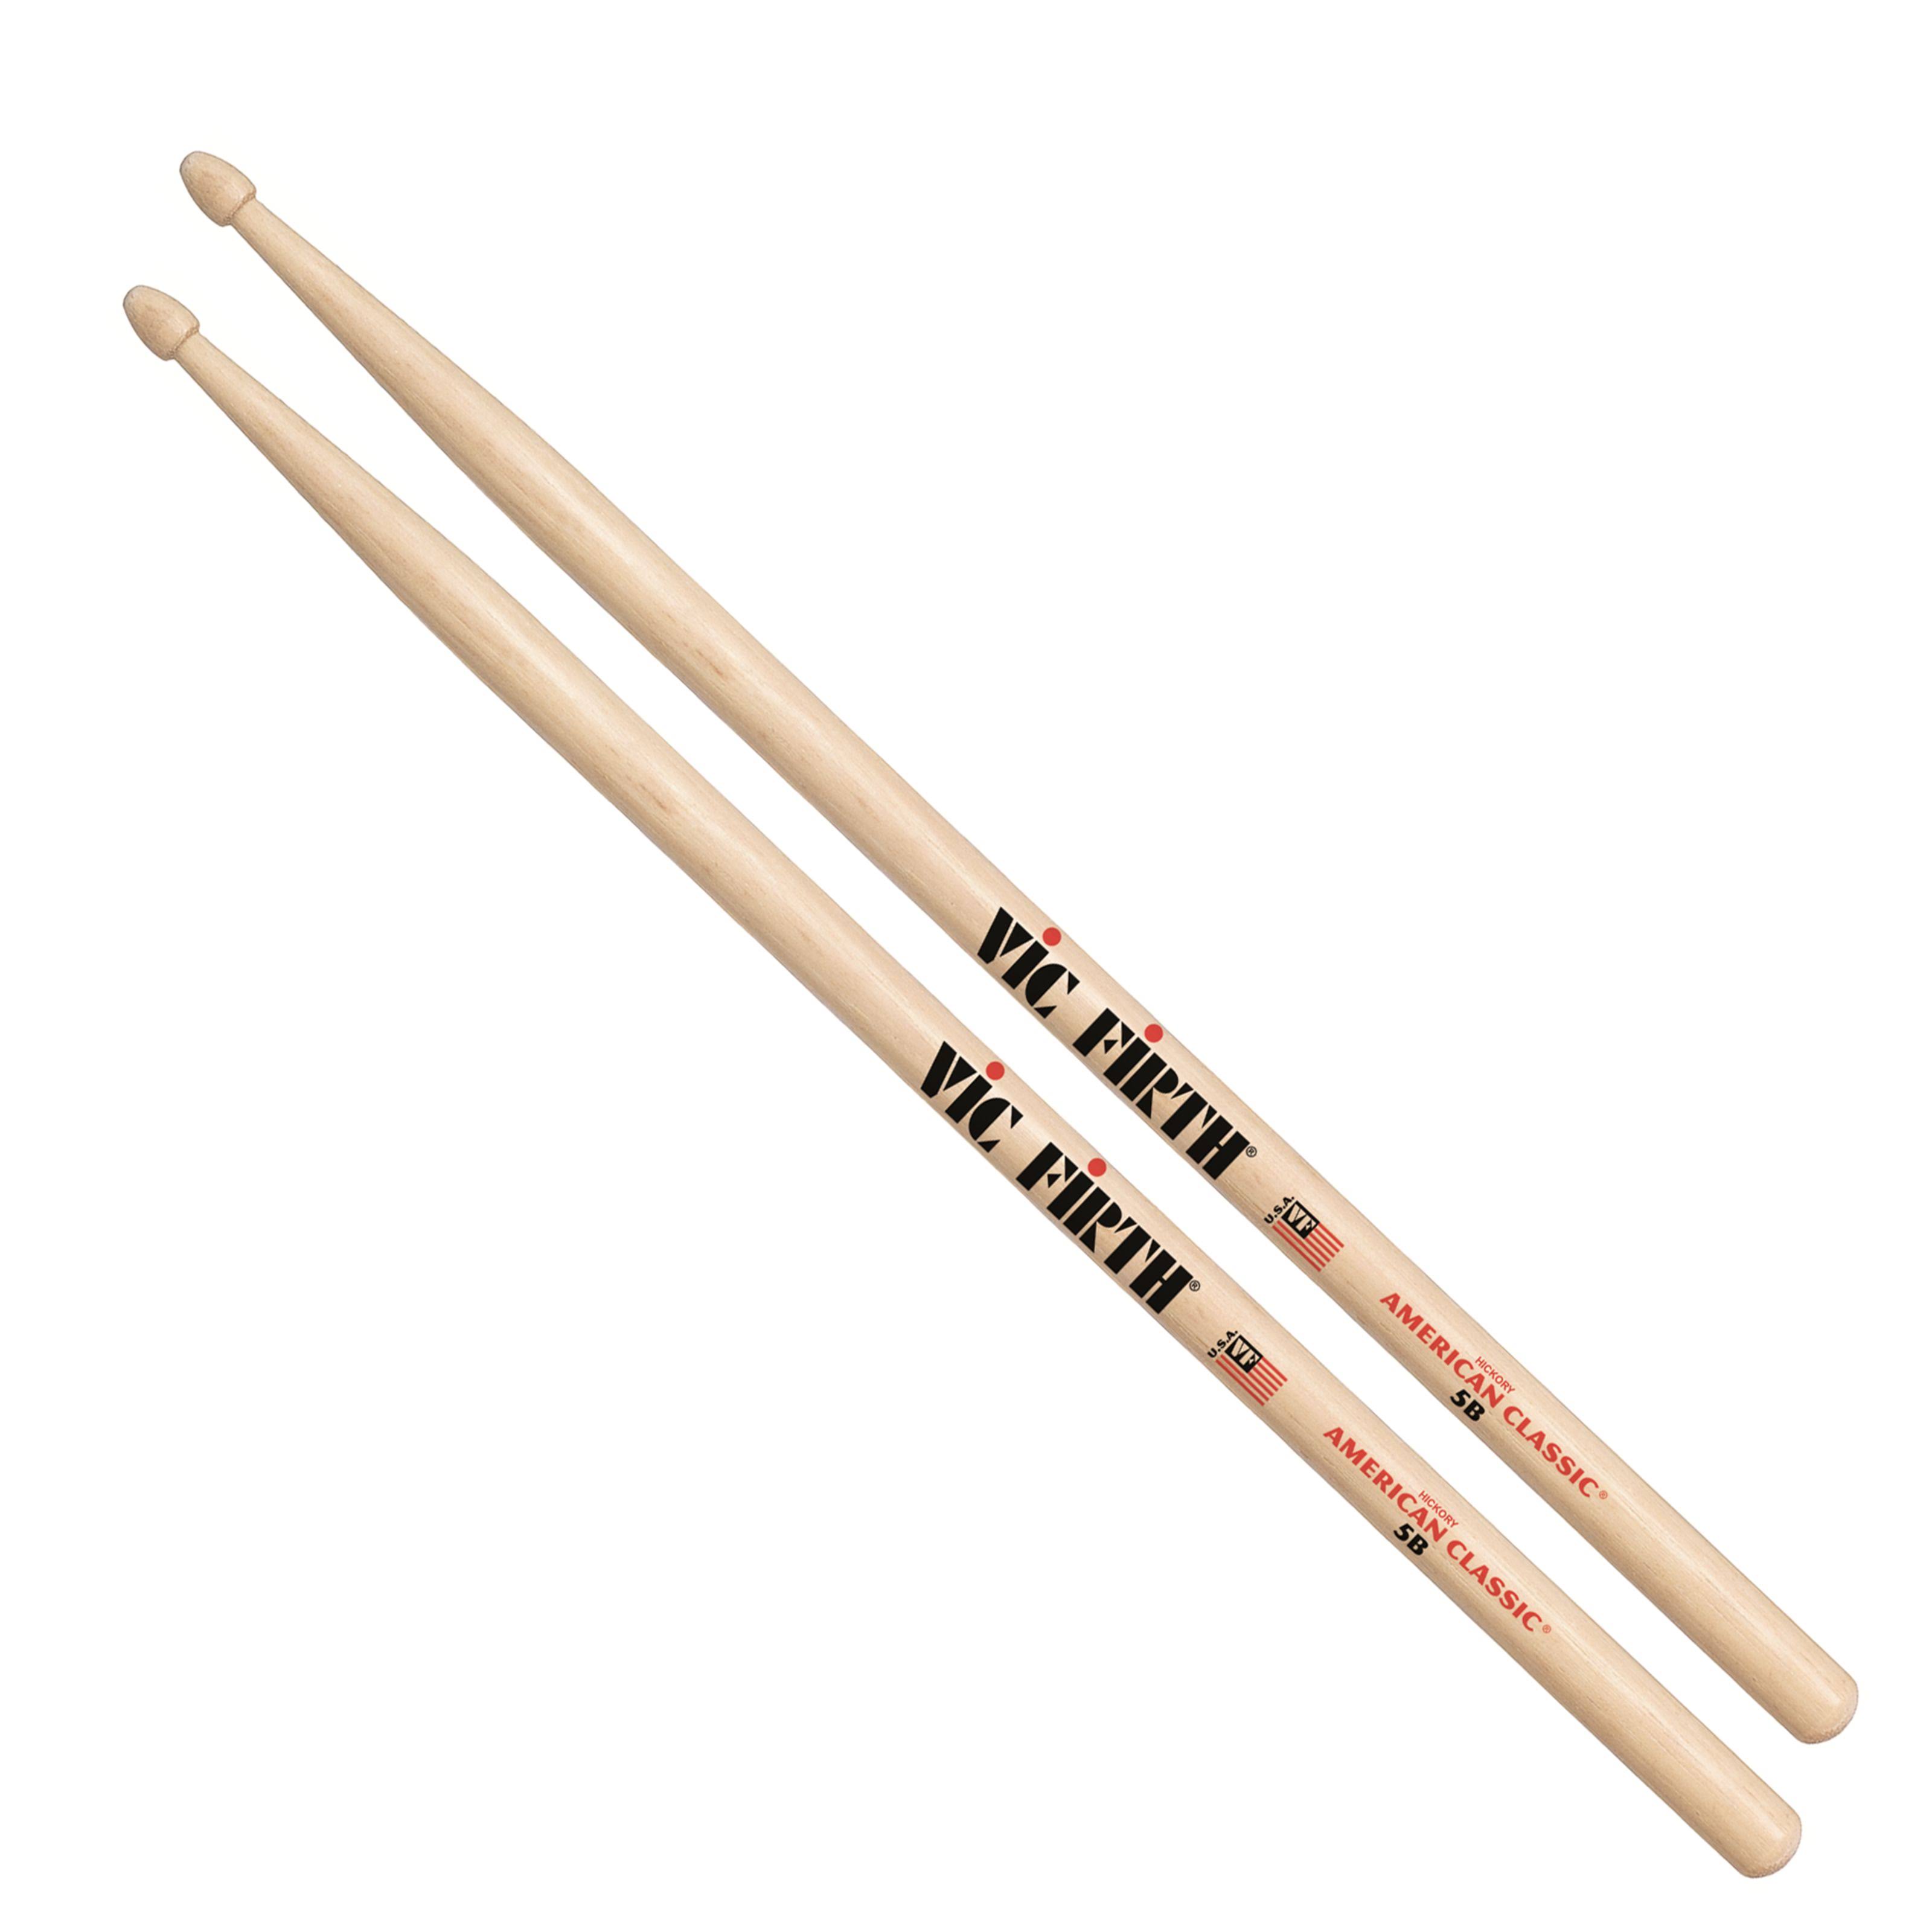 Vic Firth American Classic Wood Tip Drum Sticks - Hickory, 5B